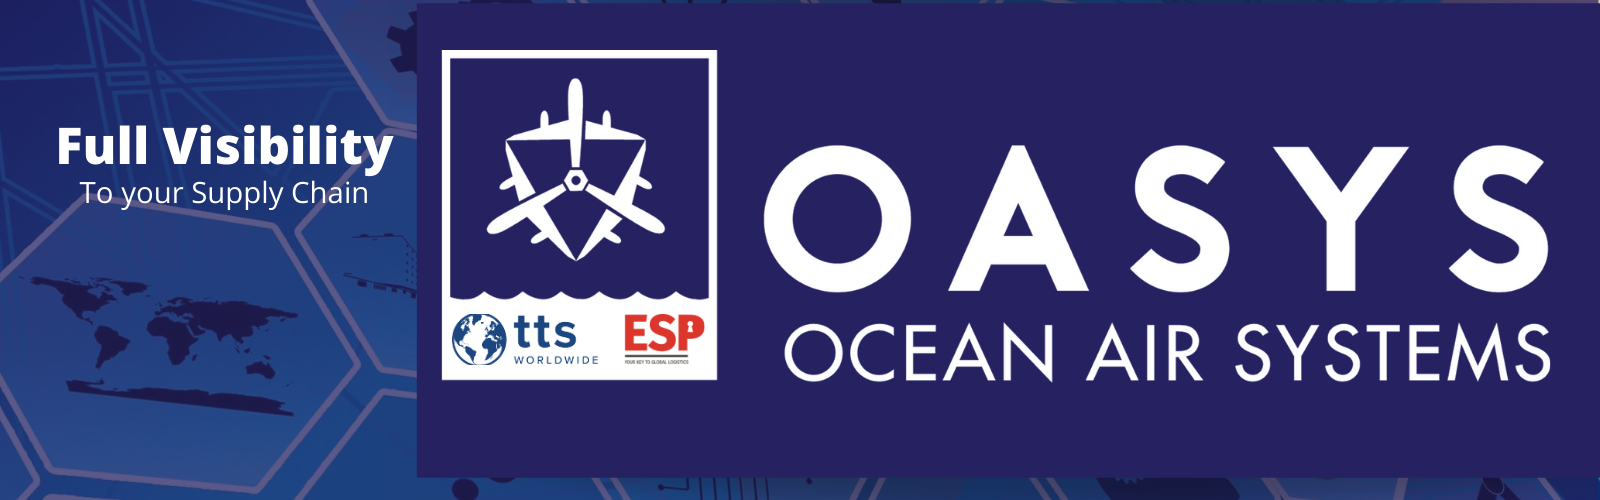 OASYS Ocean Air Systems